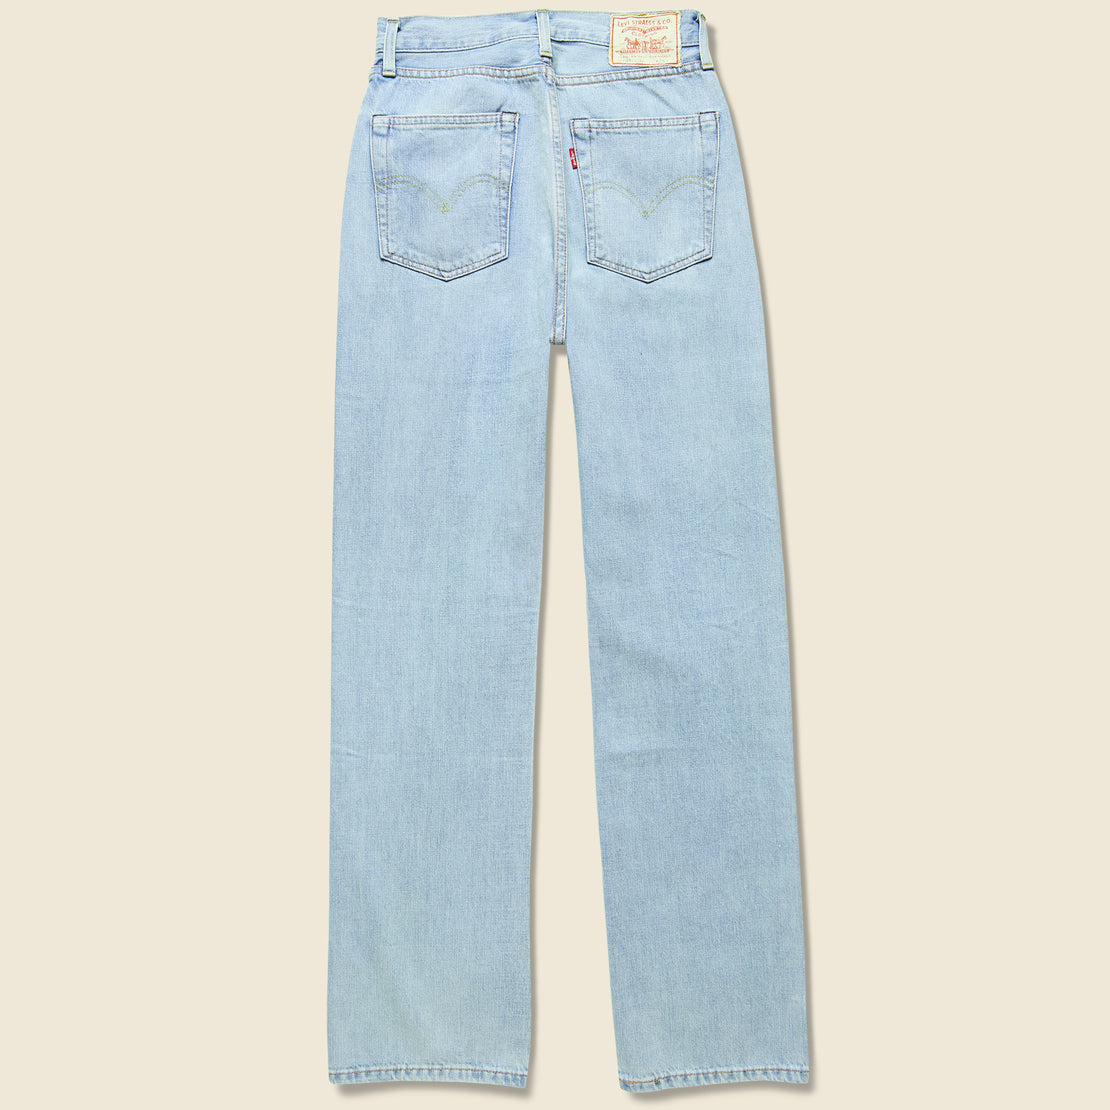 1950s 701 Jean - Stardust Wash - Levis Vintage Clothing - STAG Provisions - W - Pants - Denim